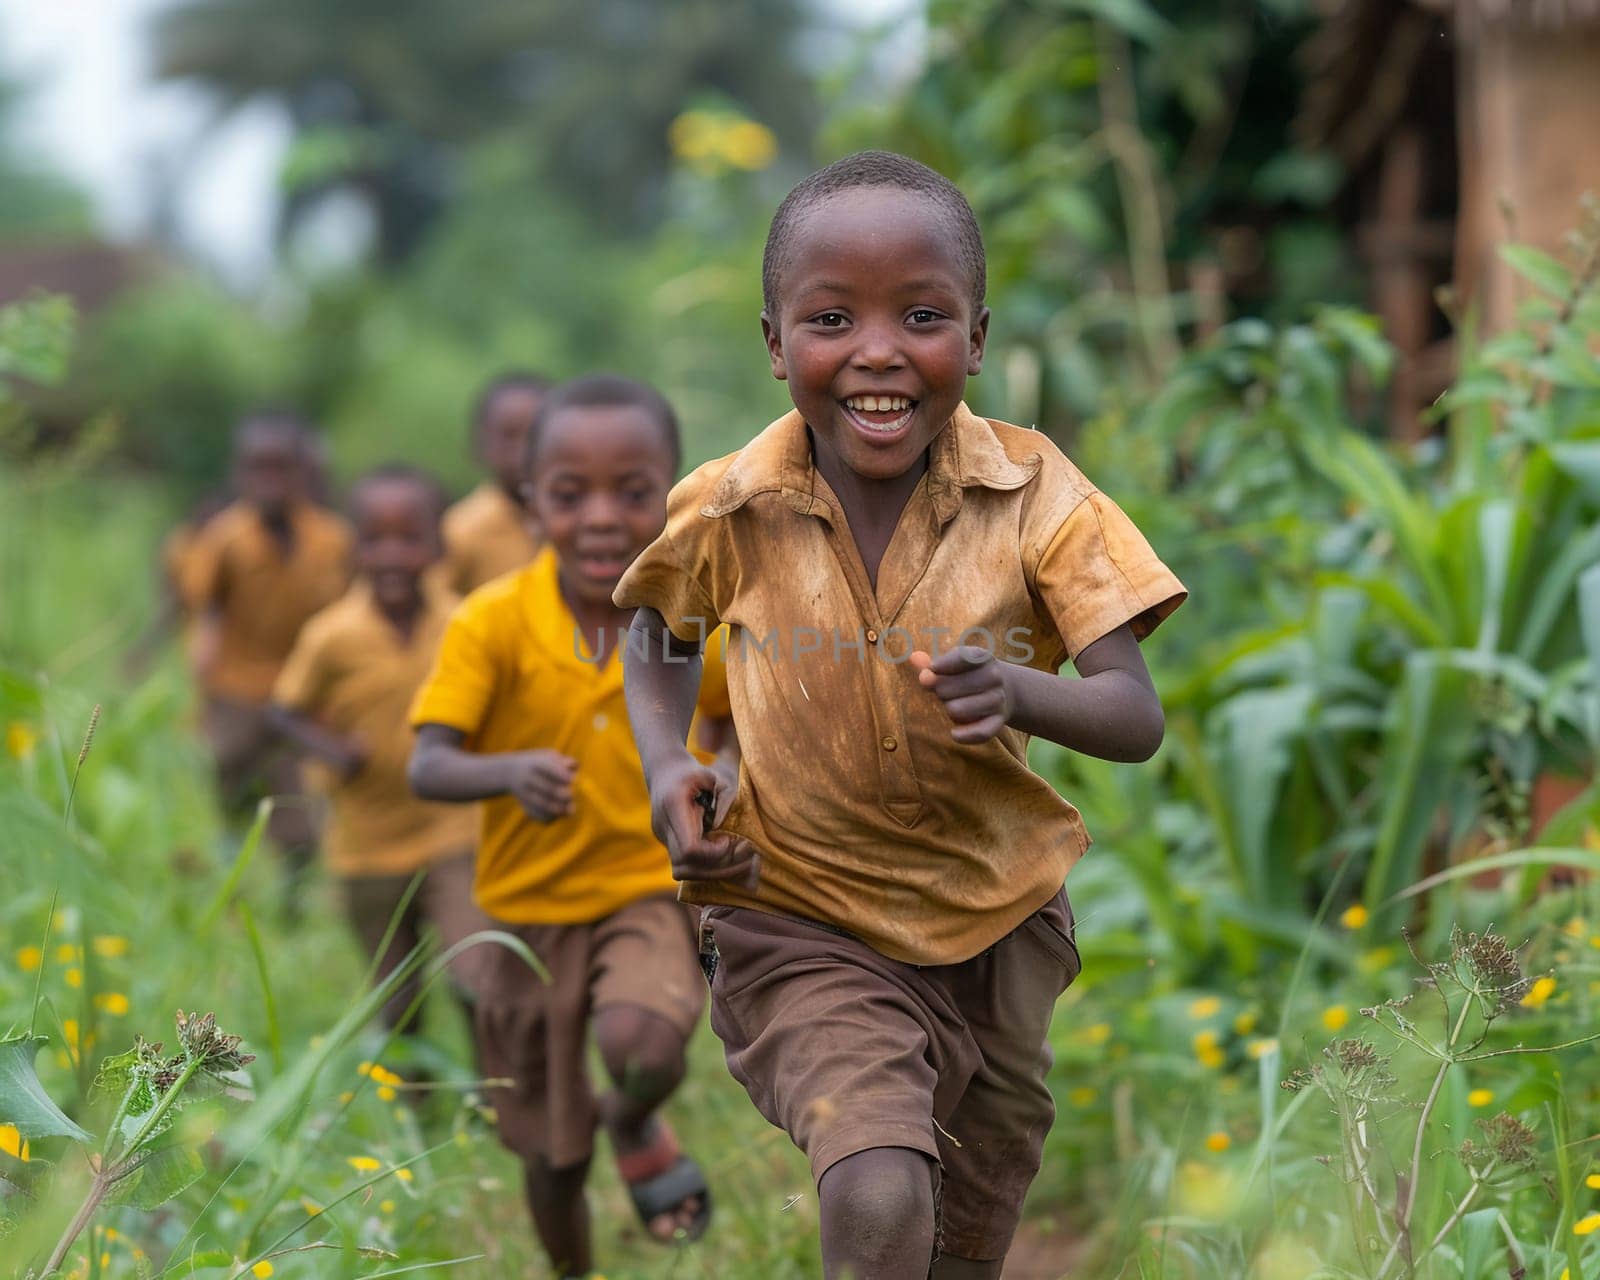 Children running through a schoolyard, symbolizing freedom and joy in education.